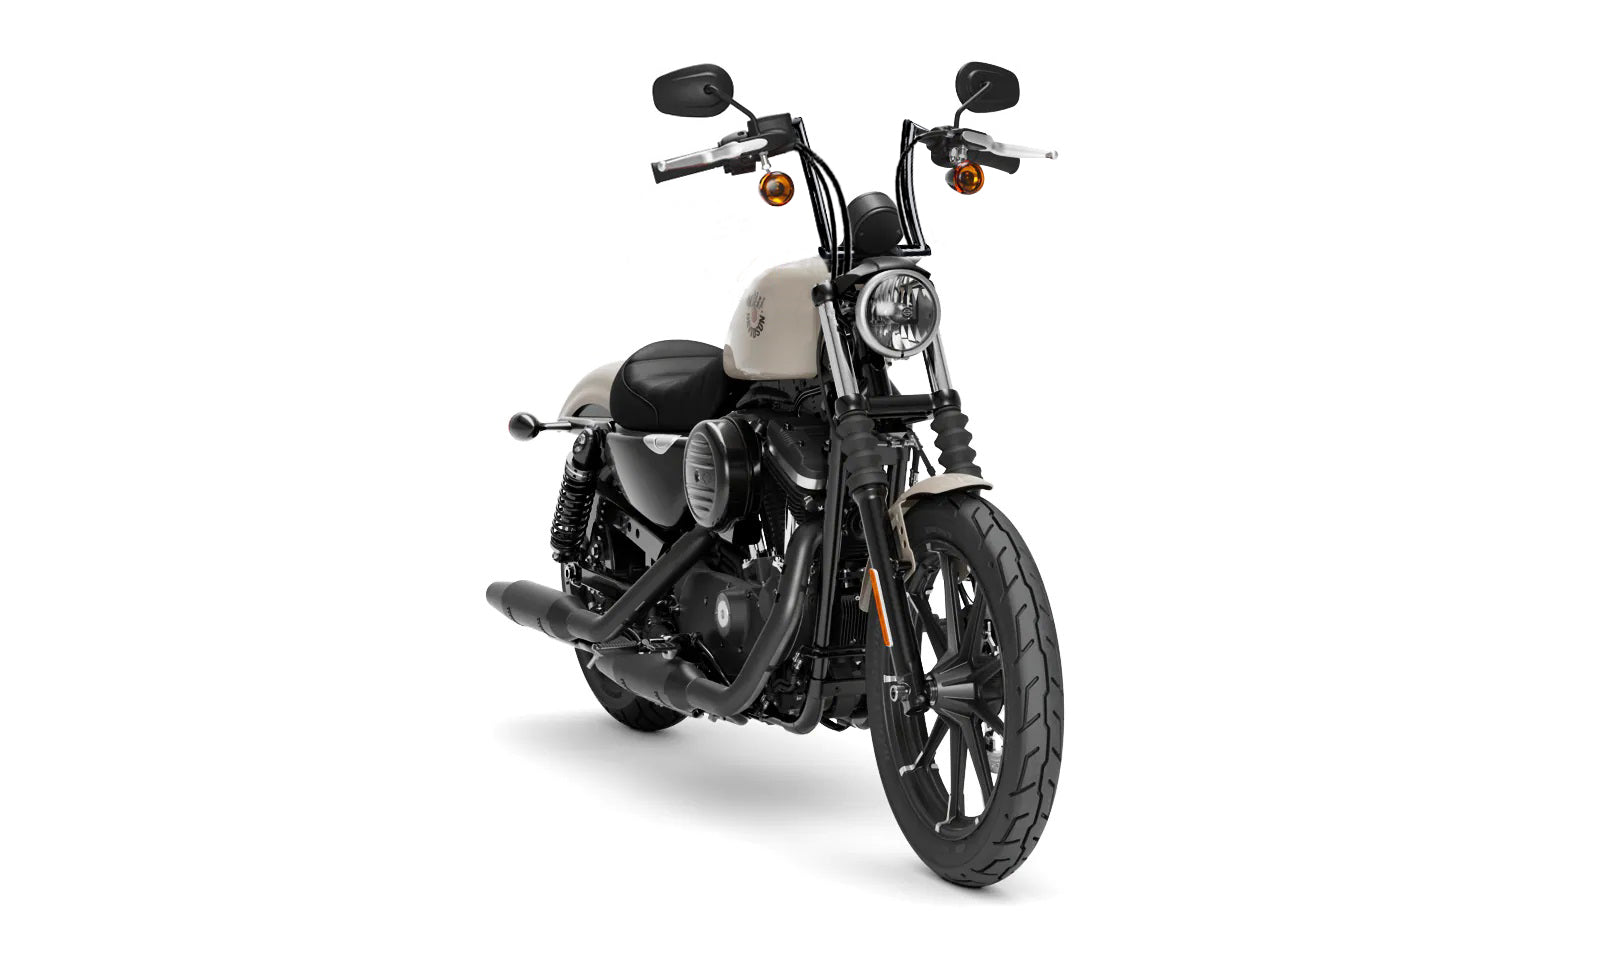 Viking Iron Born 9" Handlebar For Harley Sportster 883 Iron XL883N Gloss Black Bag on Bike View @expand